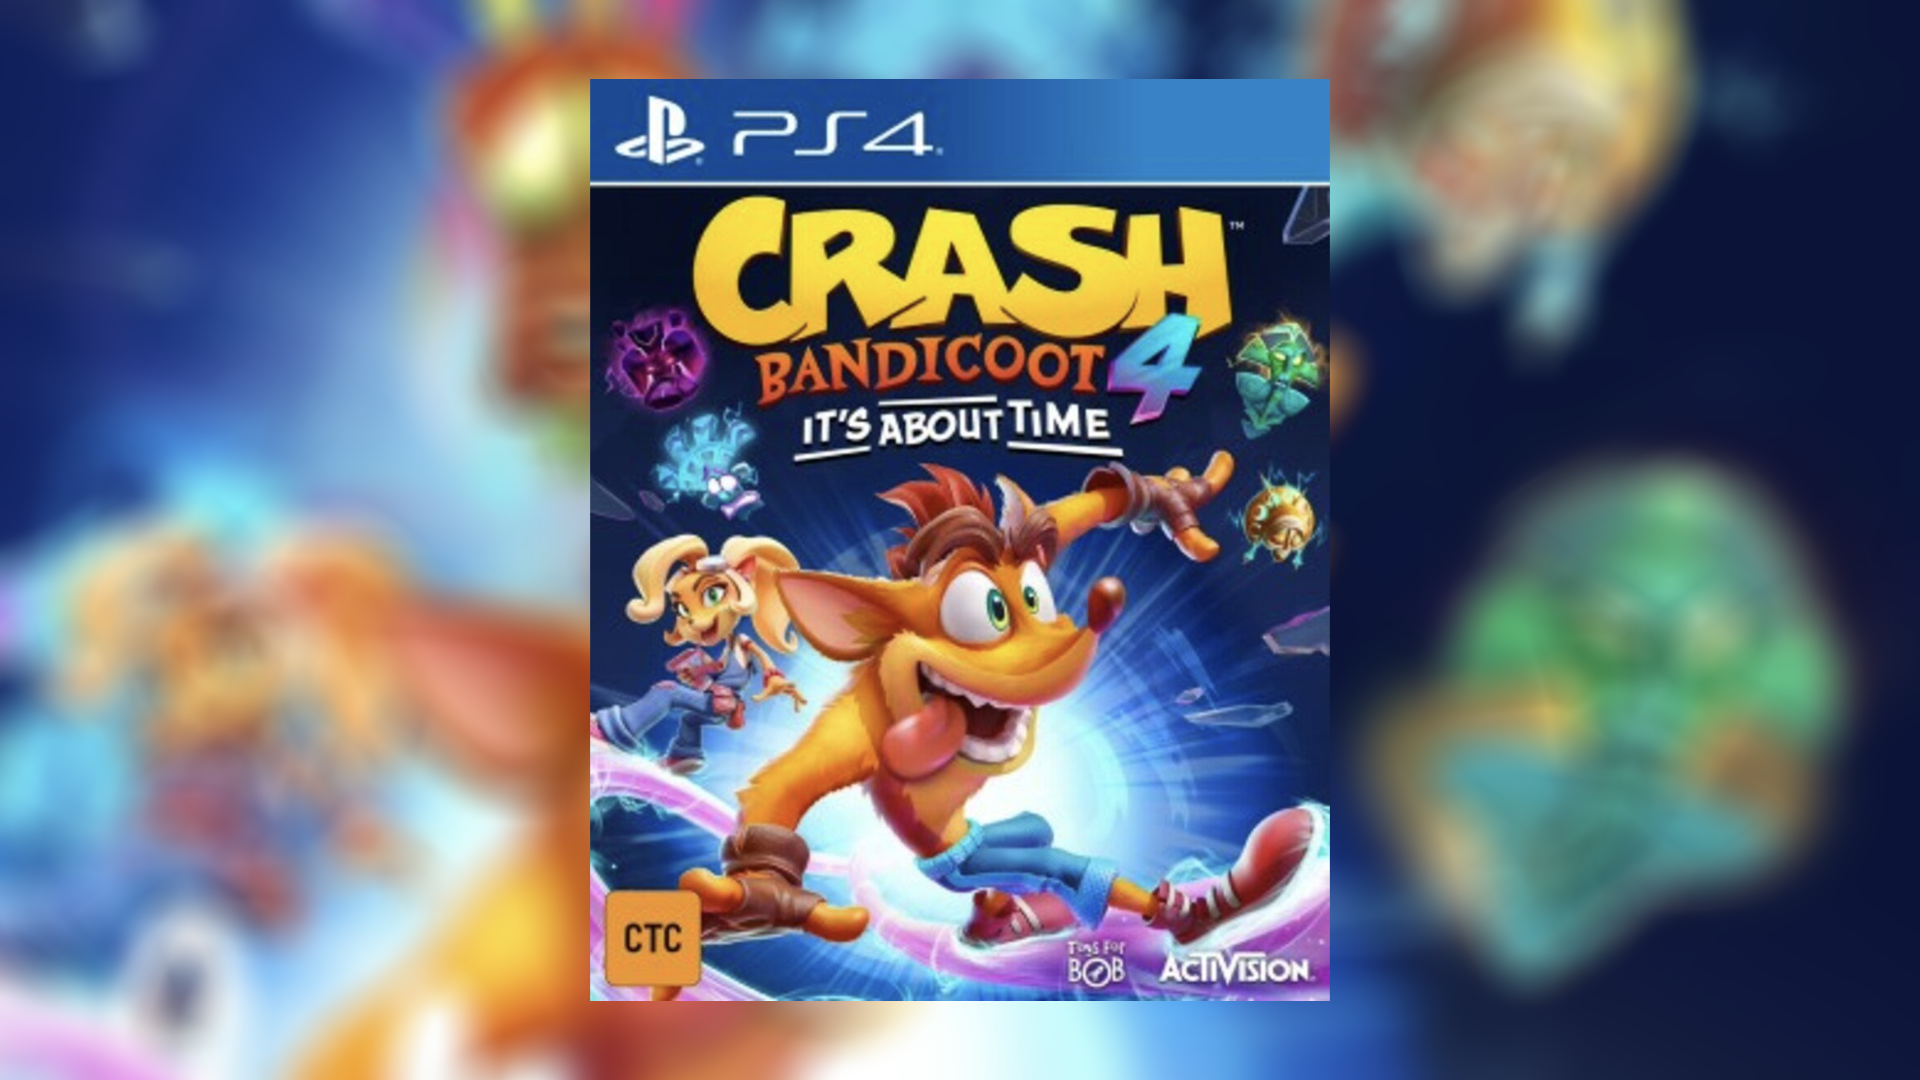 buy crash bandicoot 4 ps4